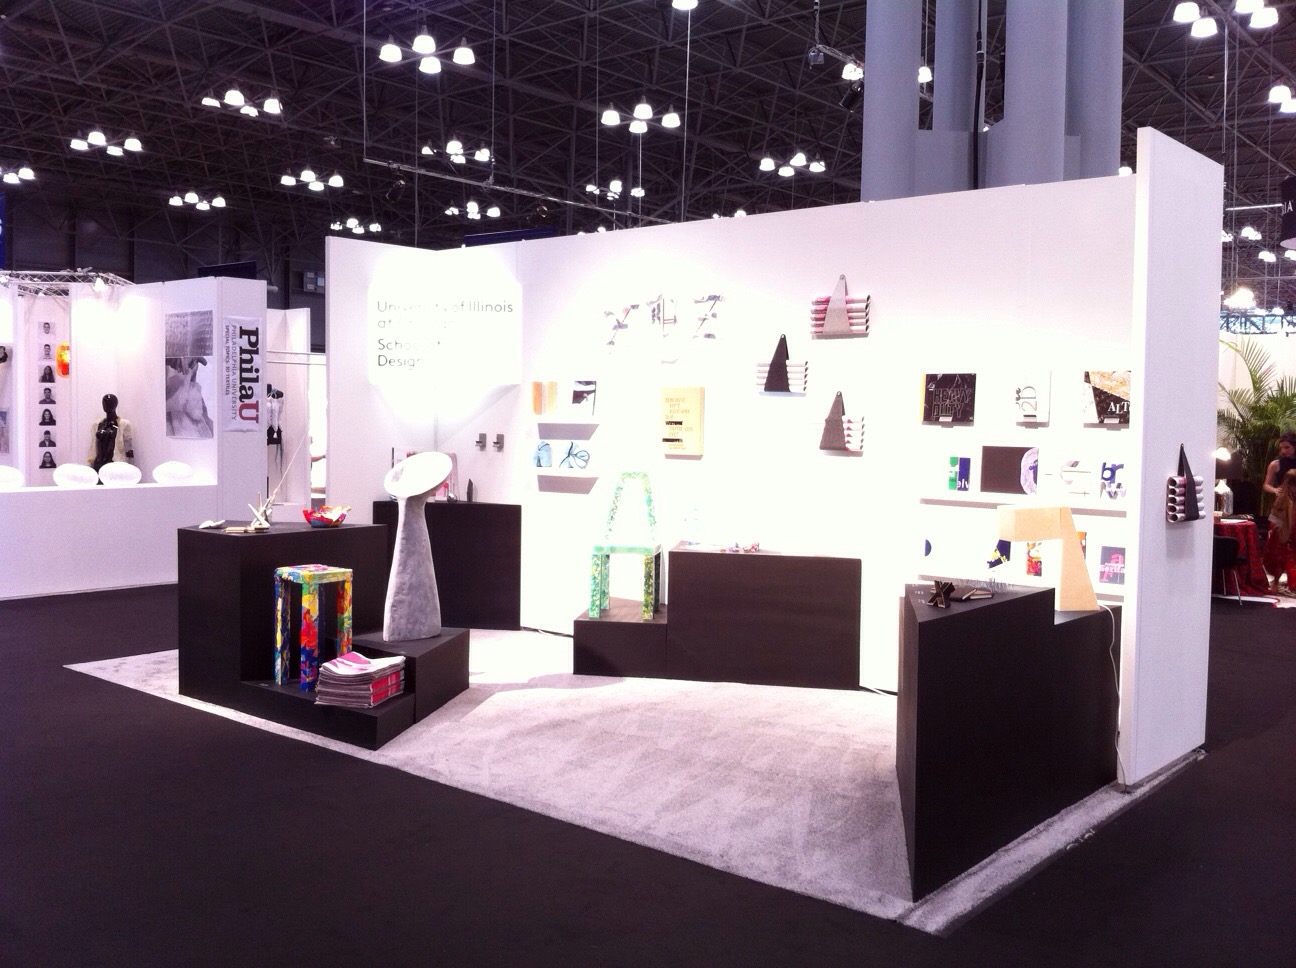 ICFF New York Features School of Design Student, Faculty Work